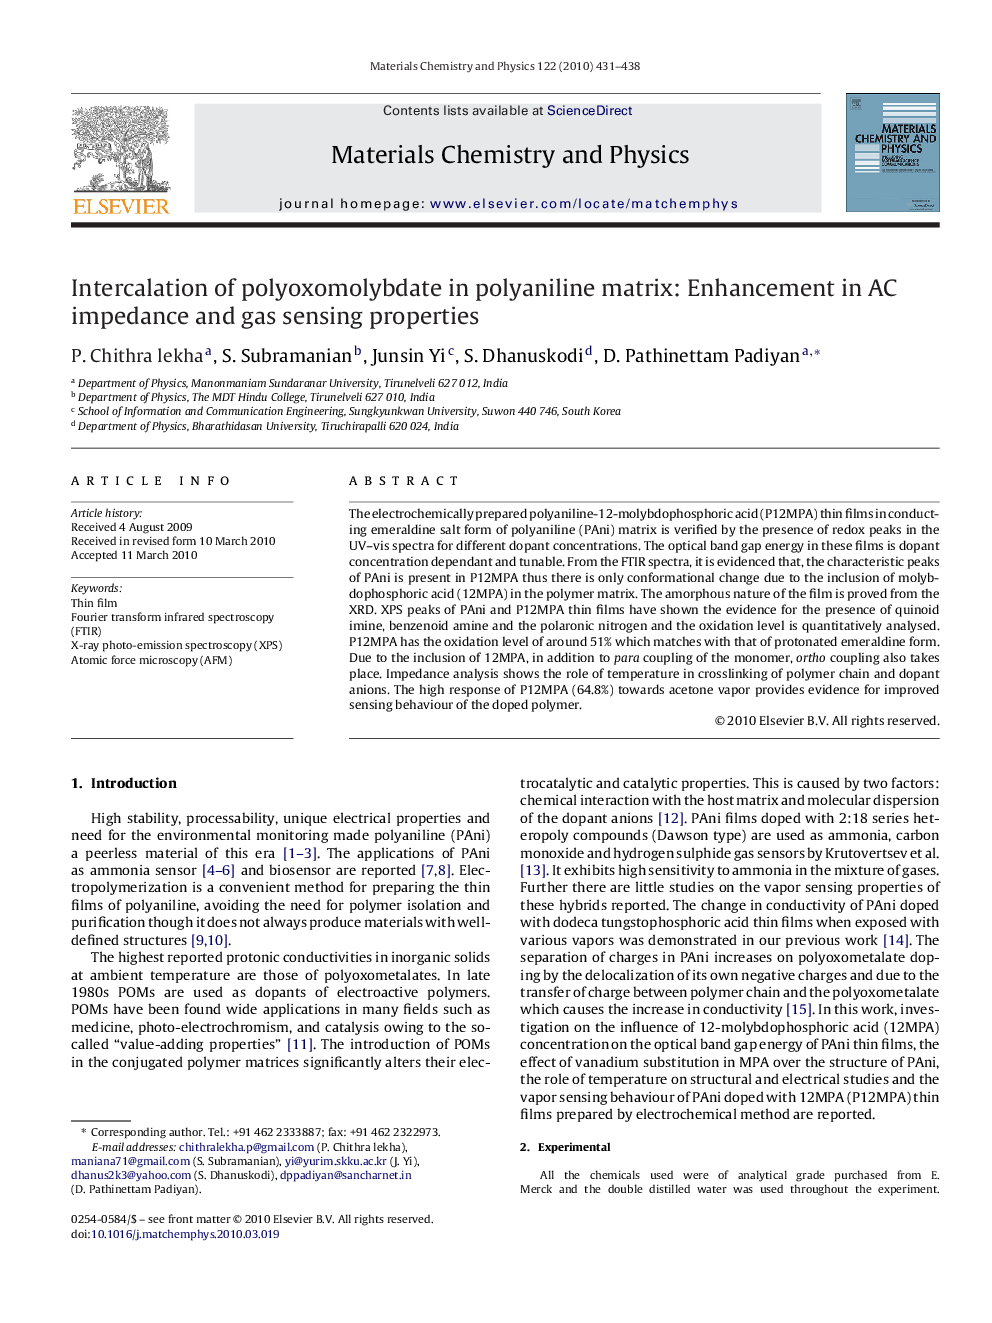 Intercalation of polyoxomolybdate in polyaniline matrix: Enhancement in AC impedance and gas sensing properties